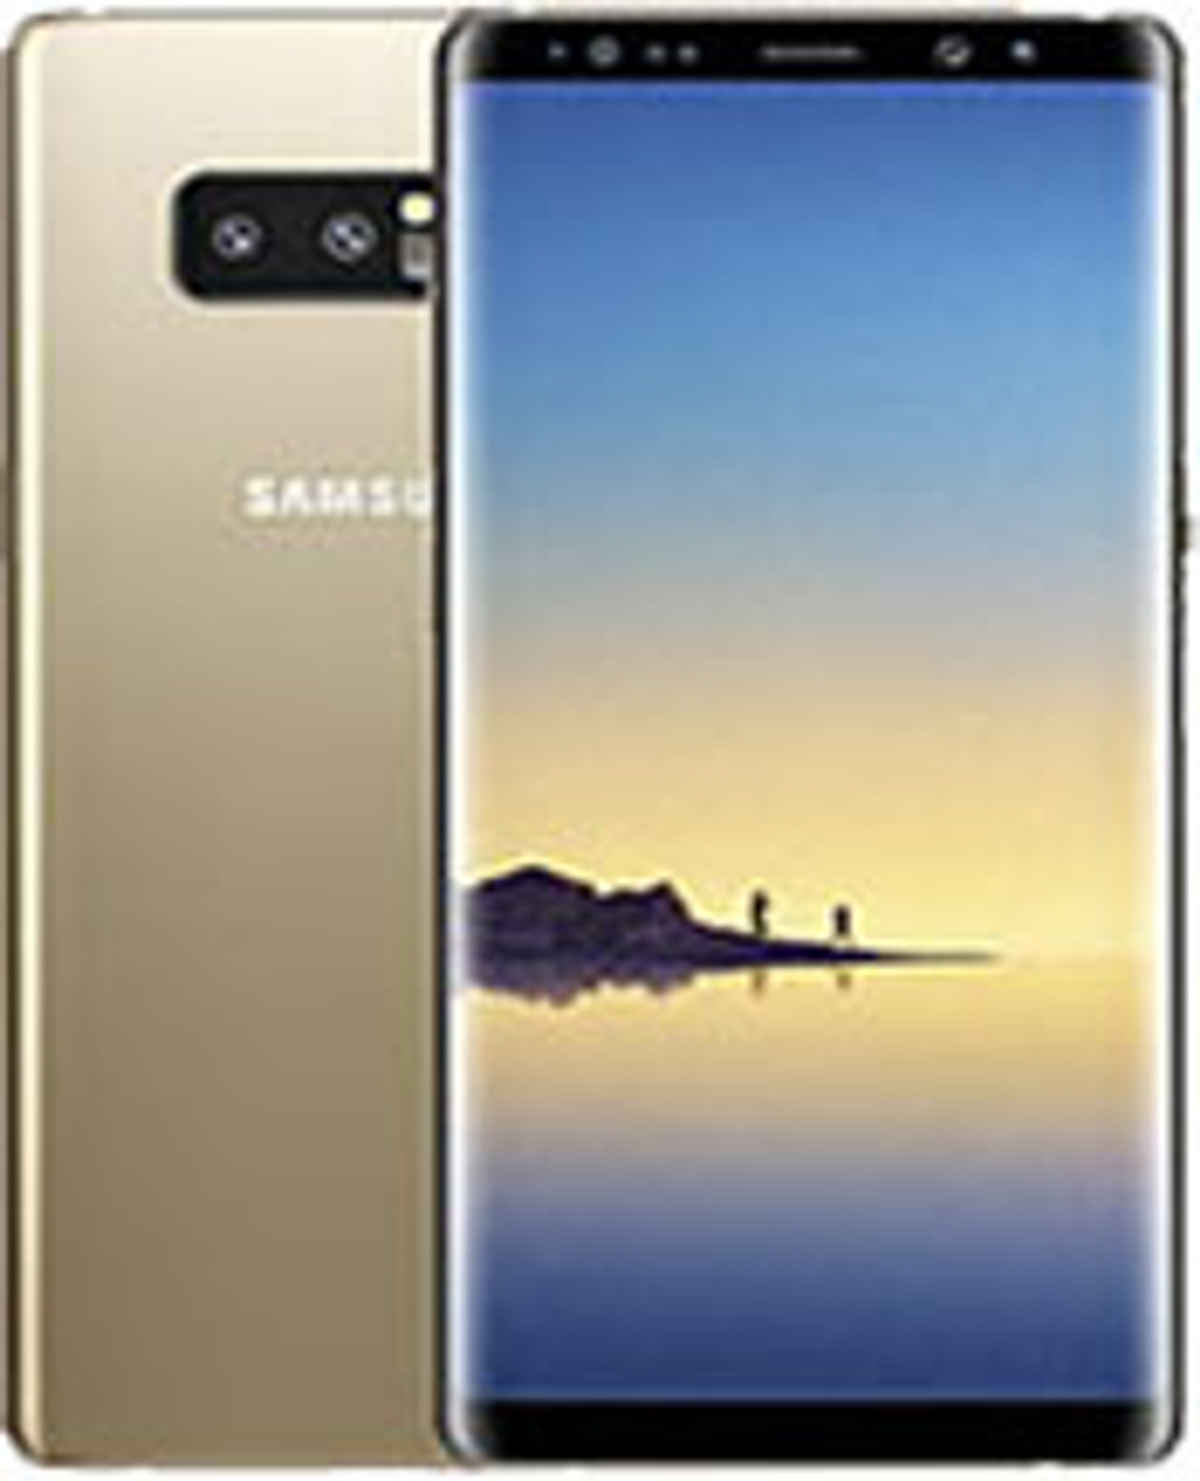 Best Samsung Phones In India 23 July 2020 Latest Smartphones